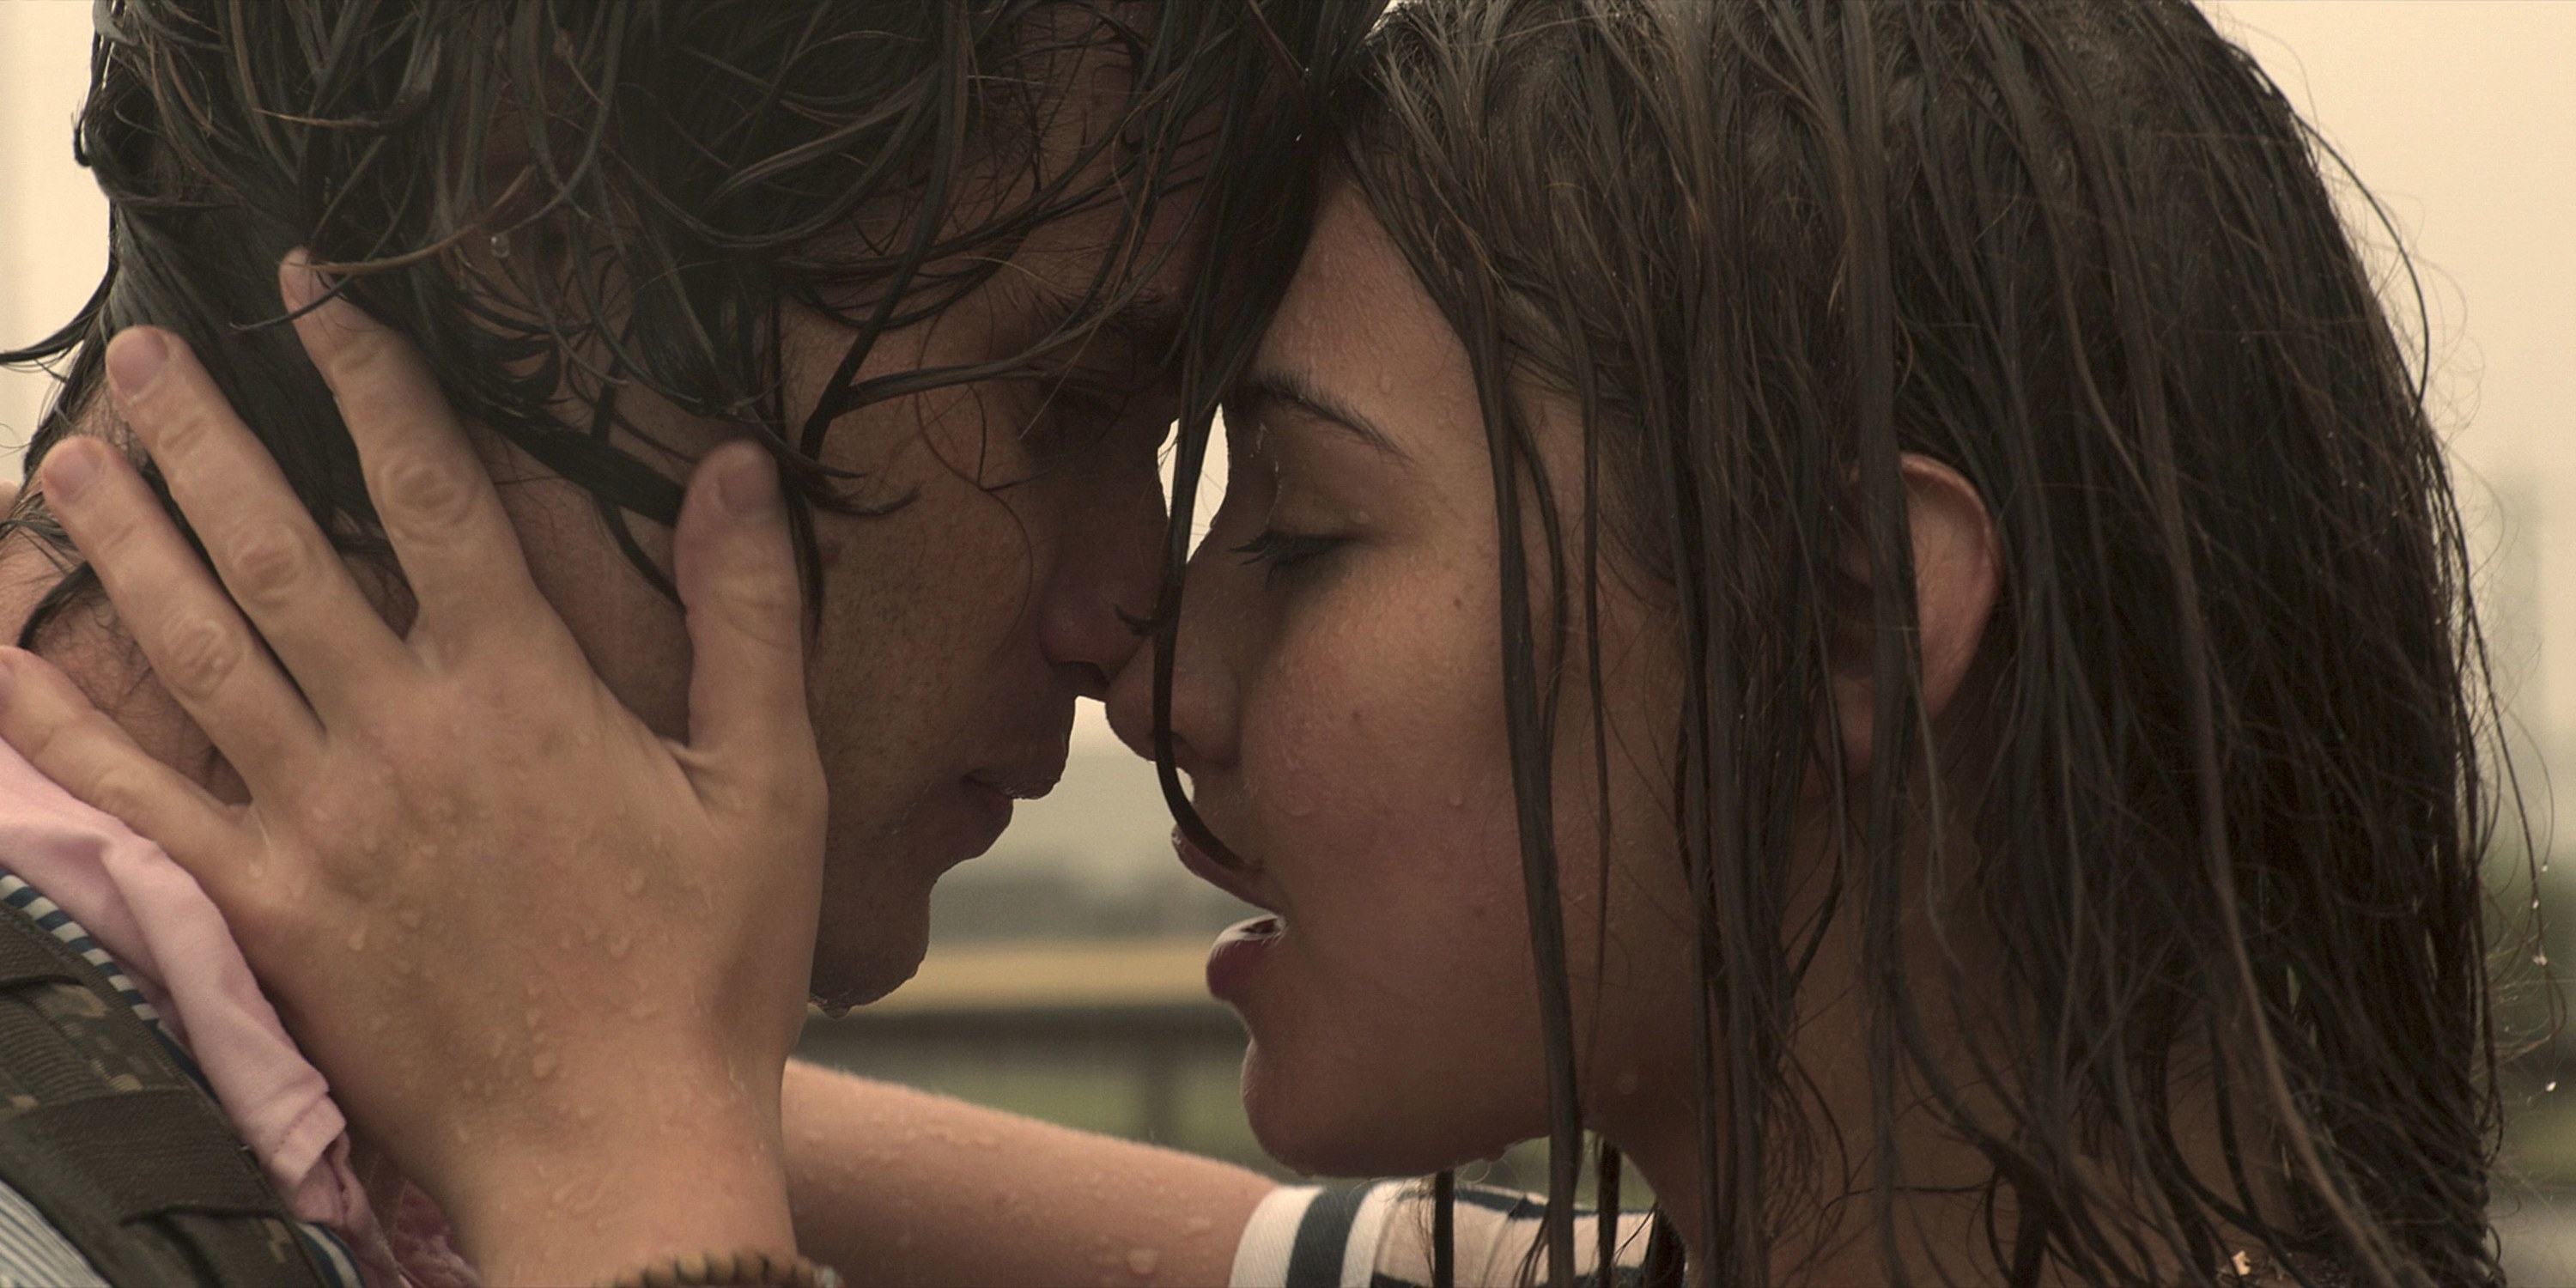 John B. and Sarah kiss in the rain.